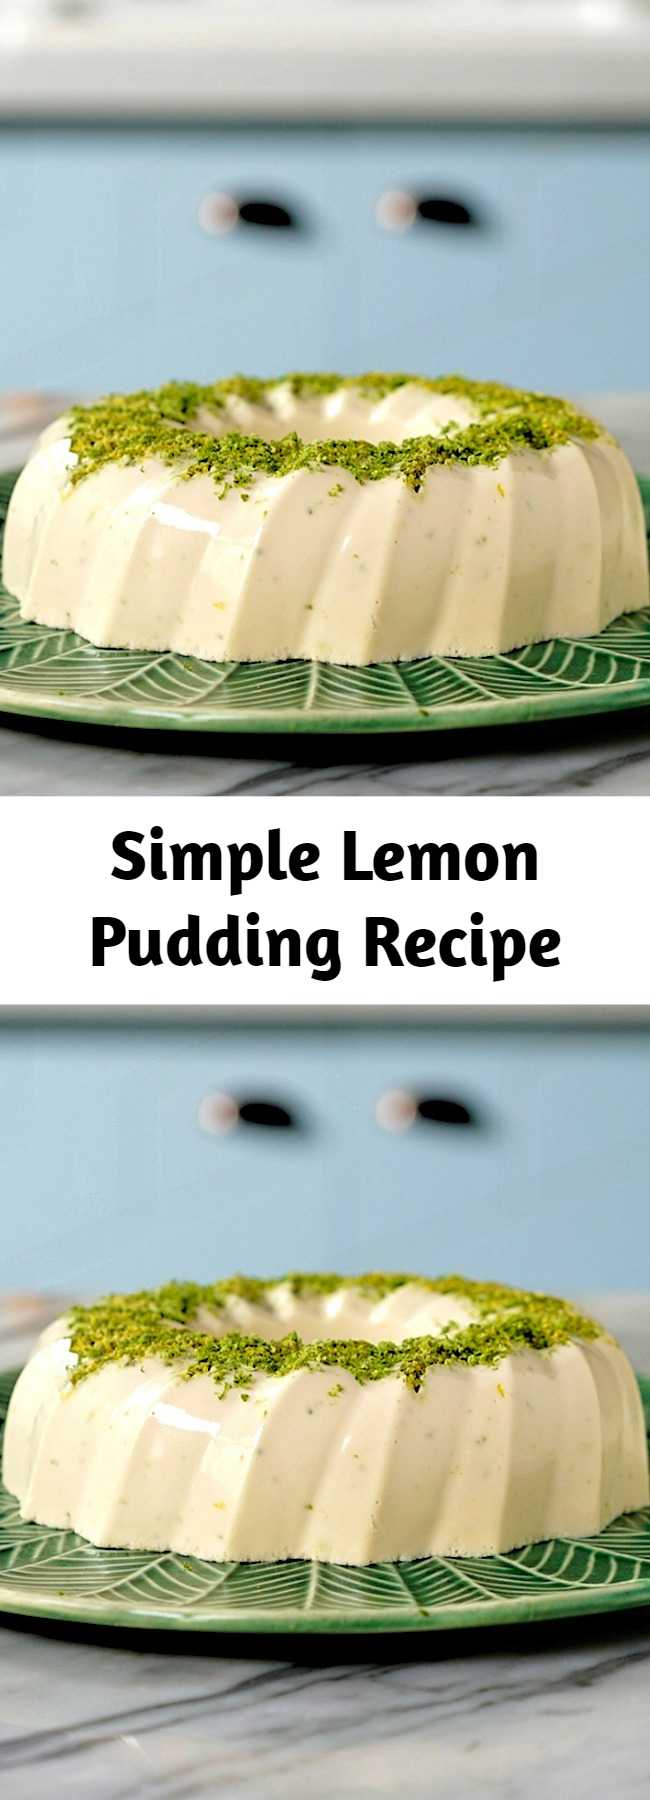 Simple Lemon Pudding Recipe